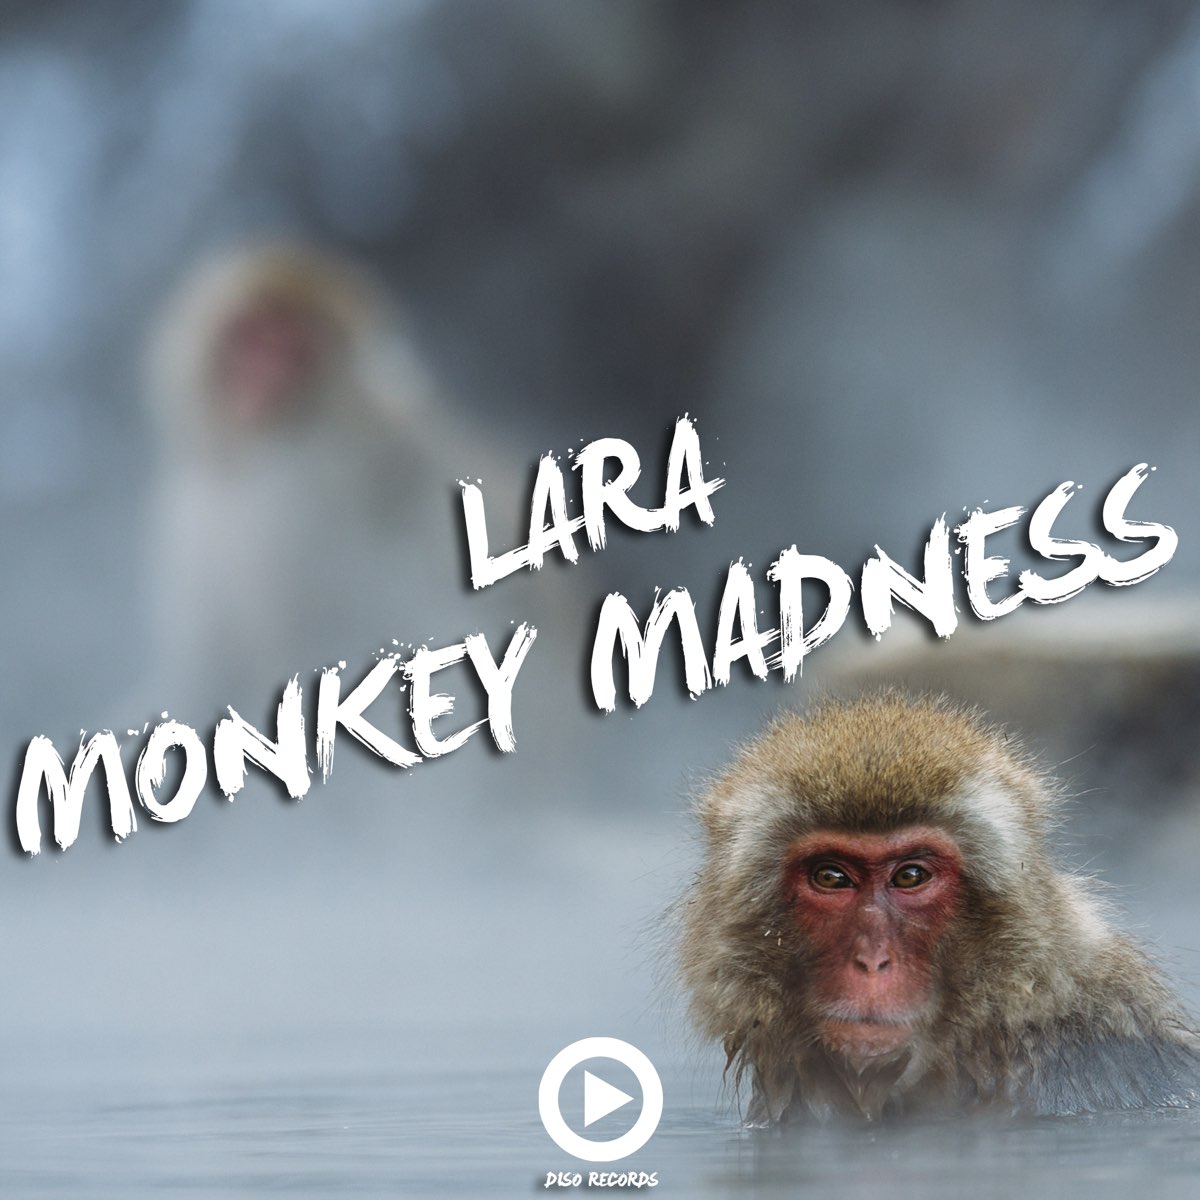 Monkey песня слушать. Monkey Madness. Манки песня. Maple Monkey Madness. Monkey Listening Music.